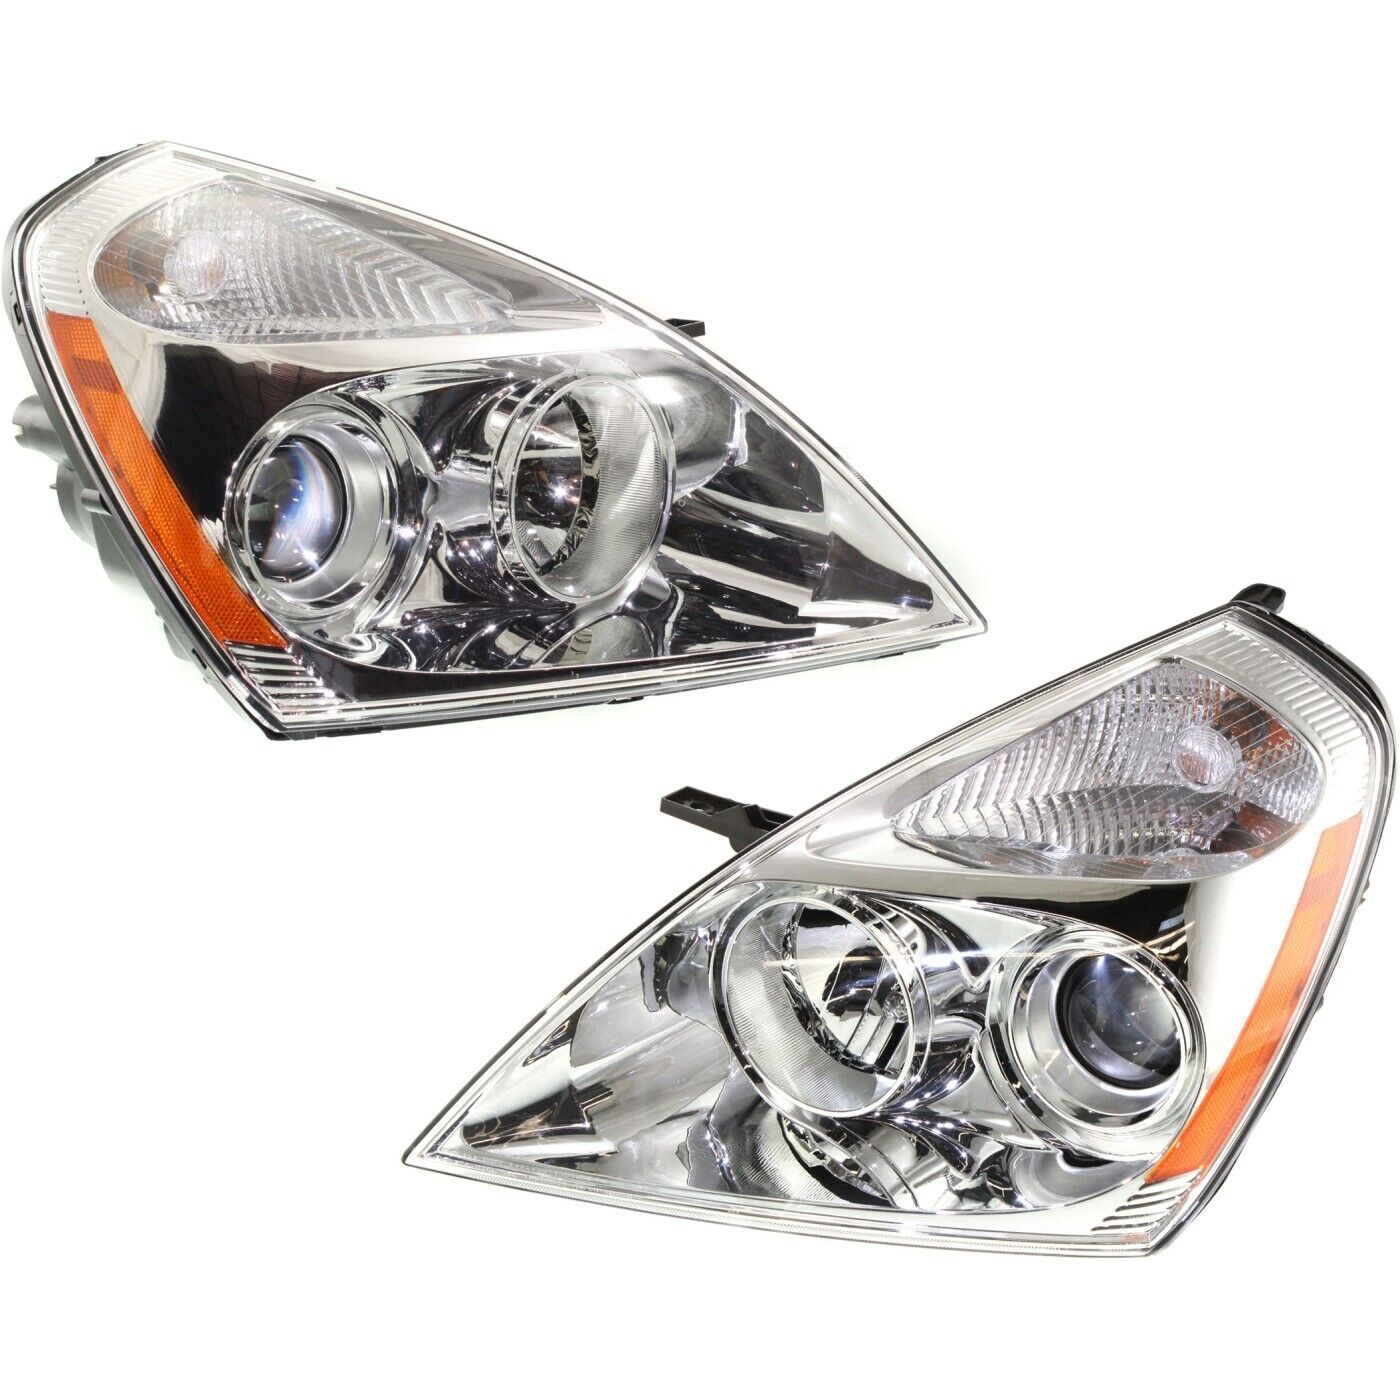 Headlight Set For 2006 Kia Sedona LX EX Models Left and Right With Bulb 2Pc